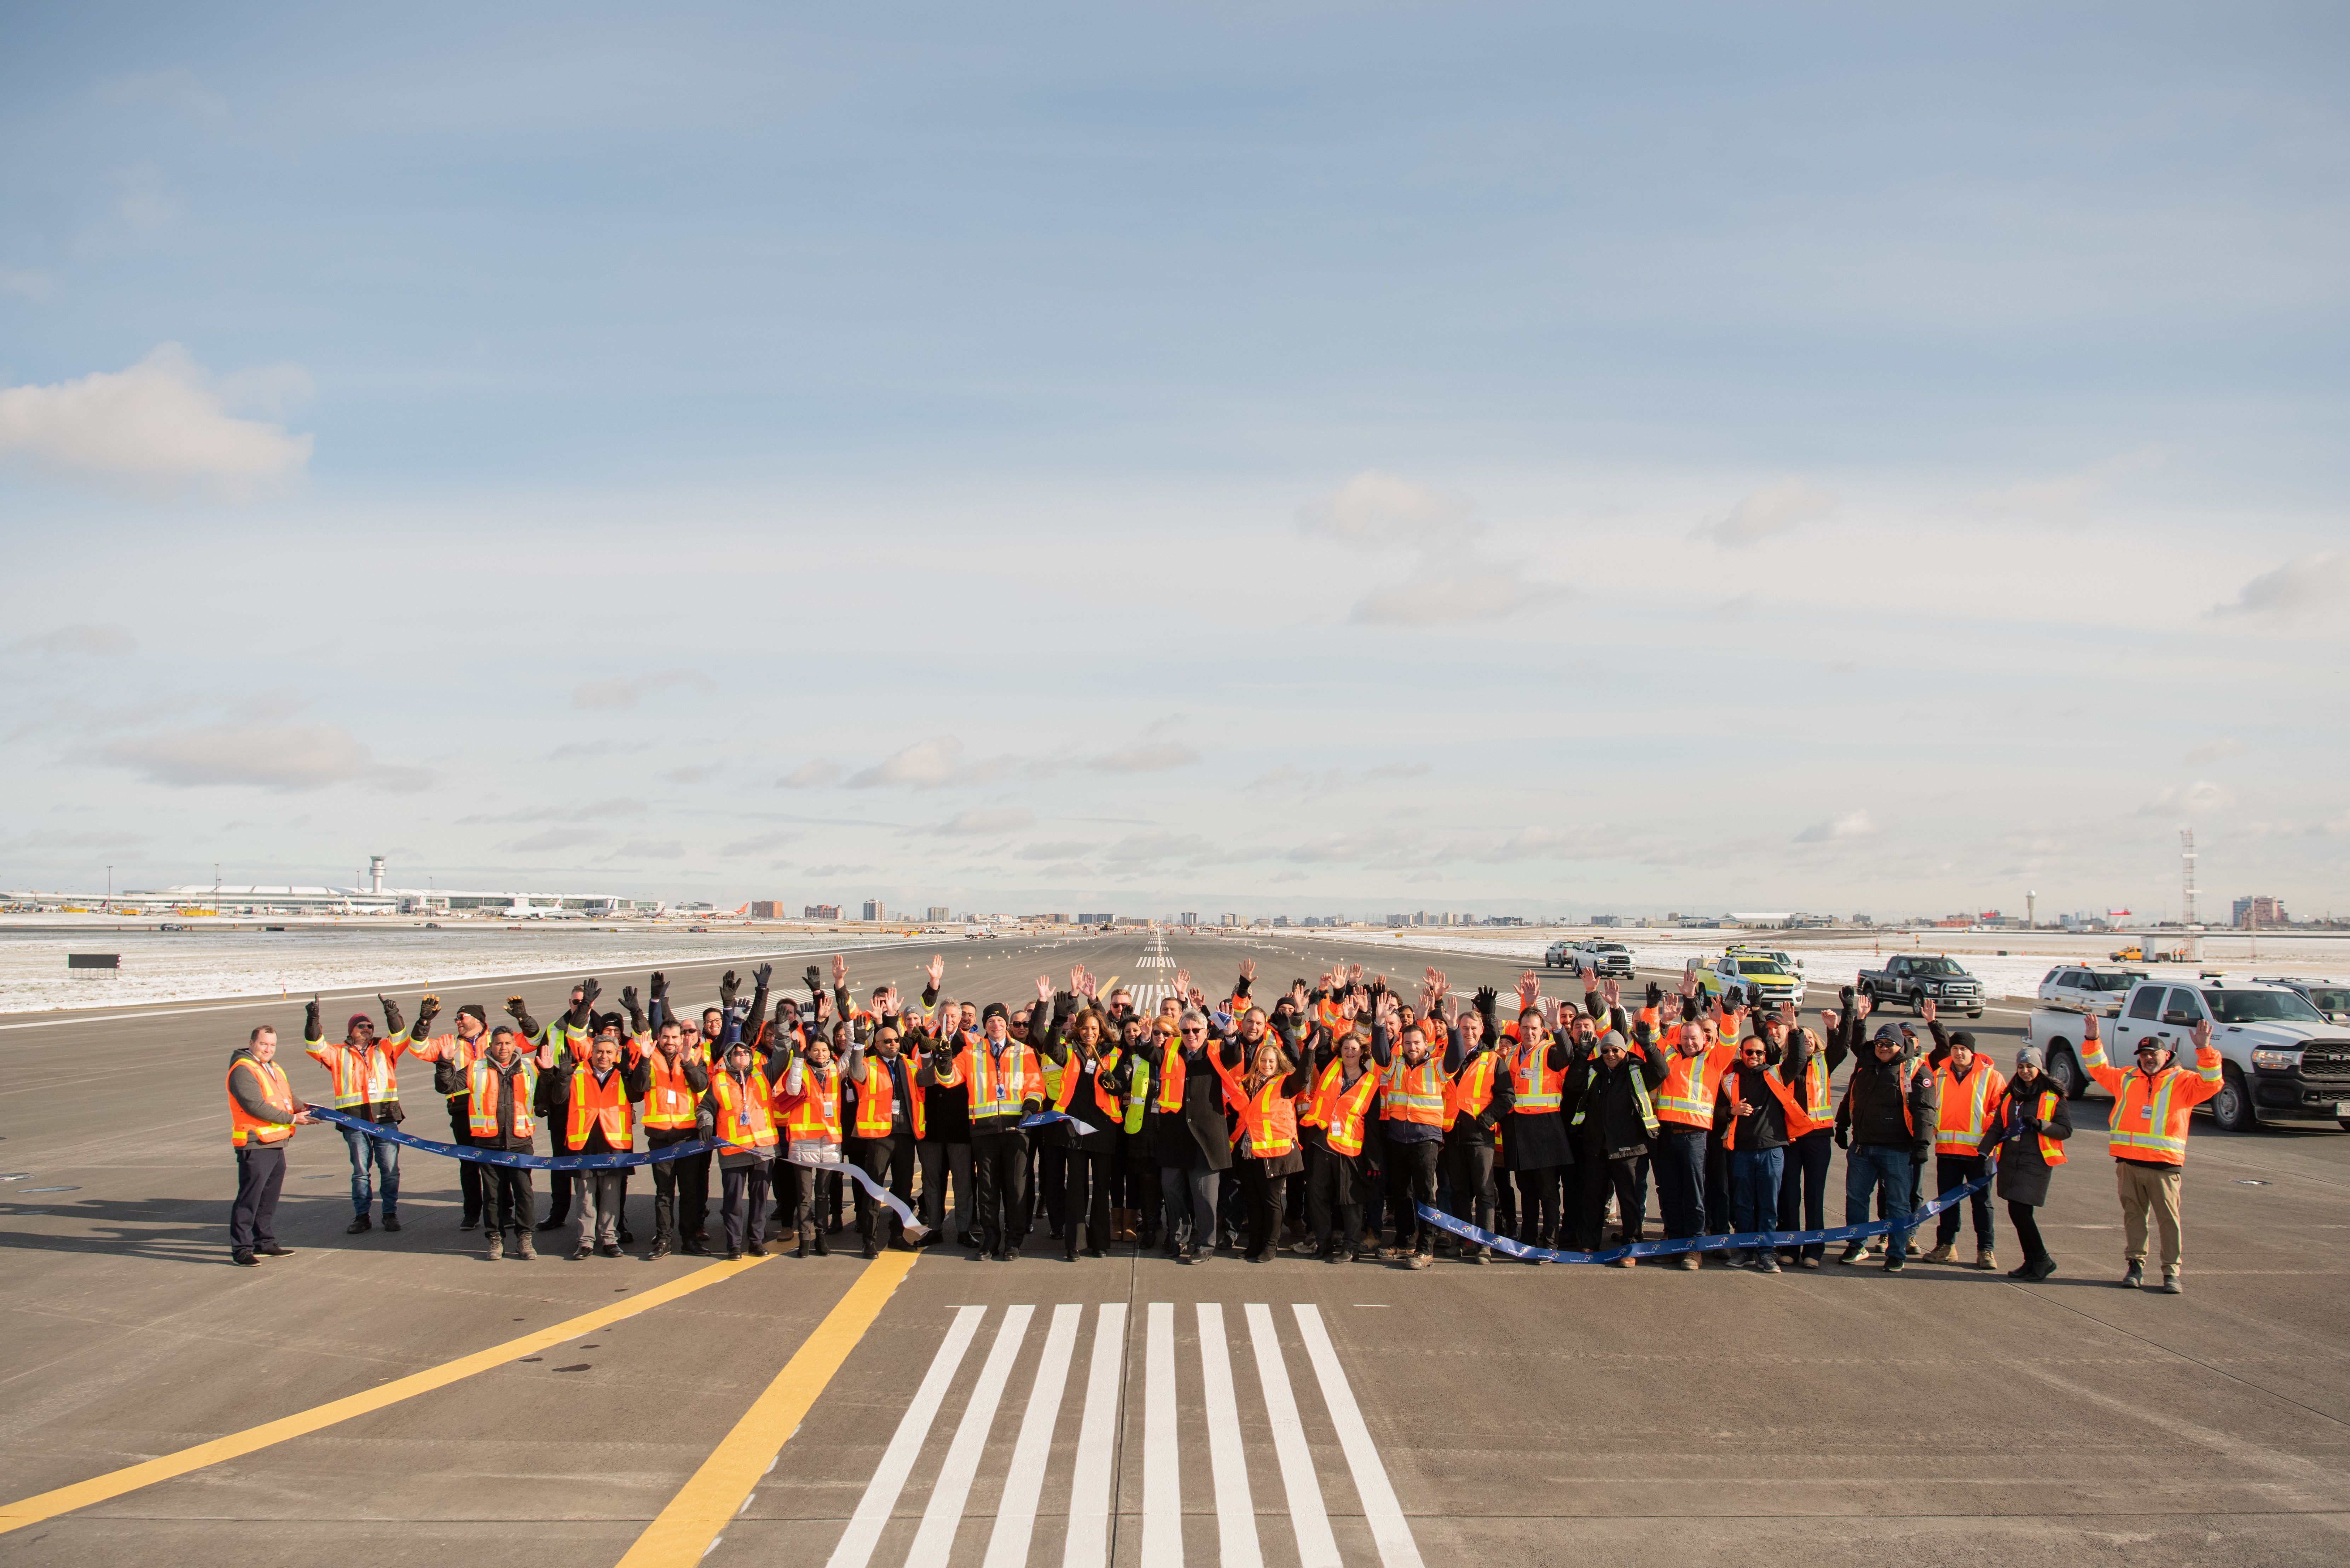 toronto pearson new runway 06L/24R